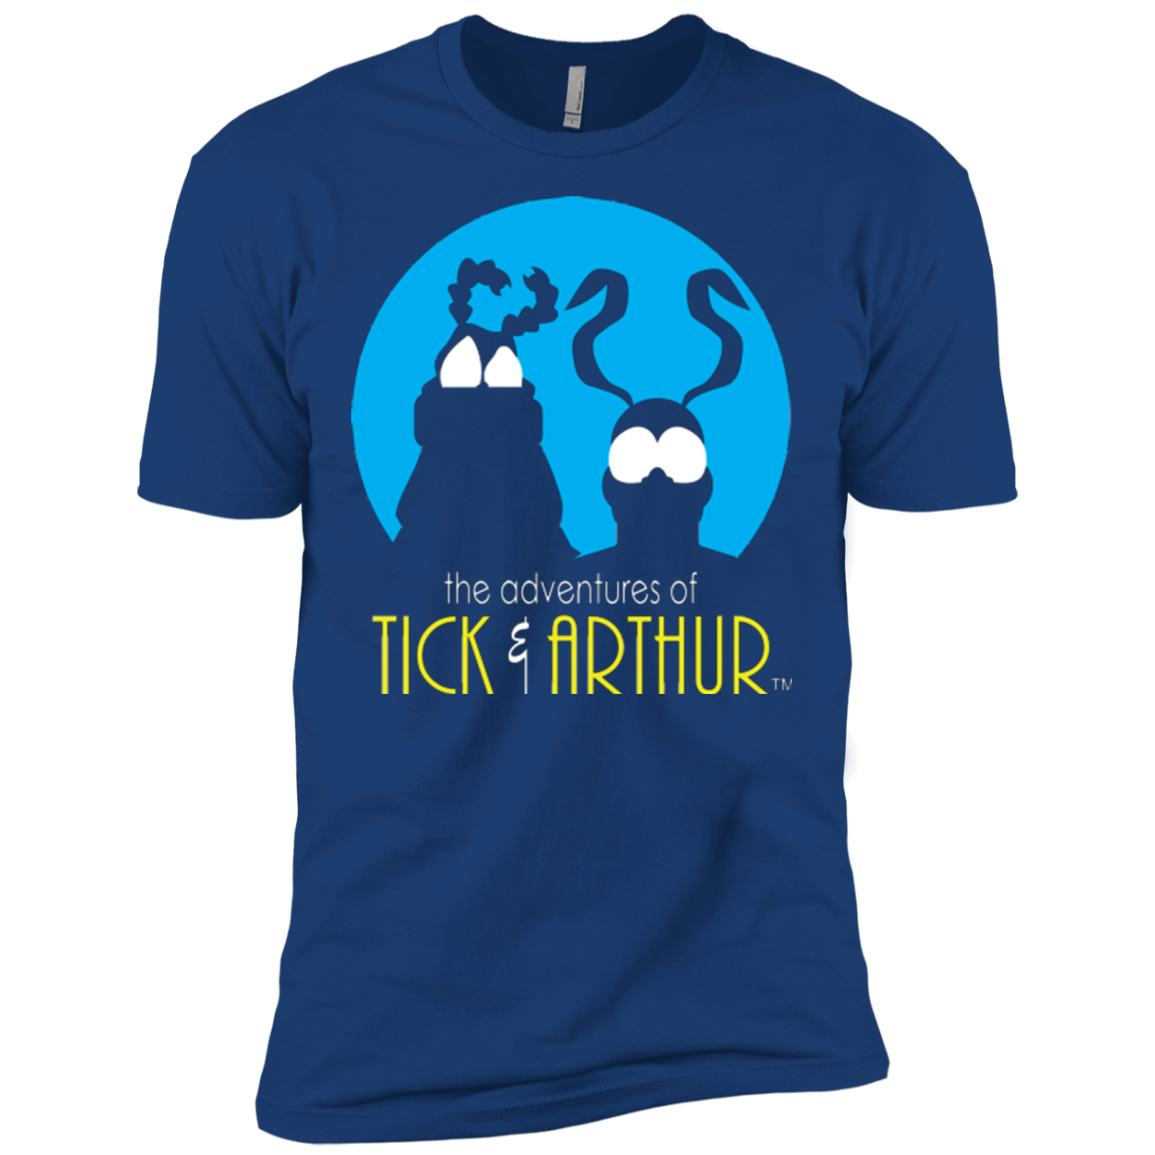 Tick and Arthur Men's Premium T-Shirt